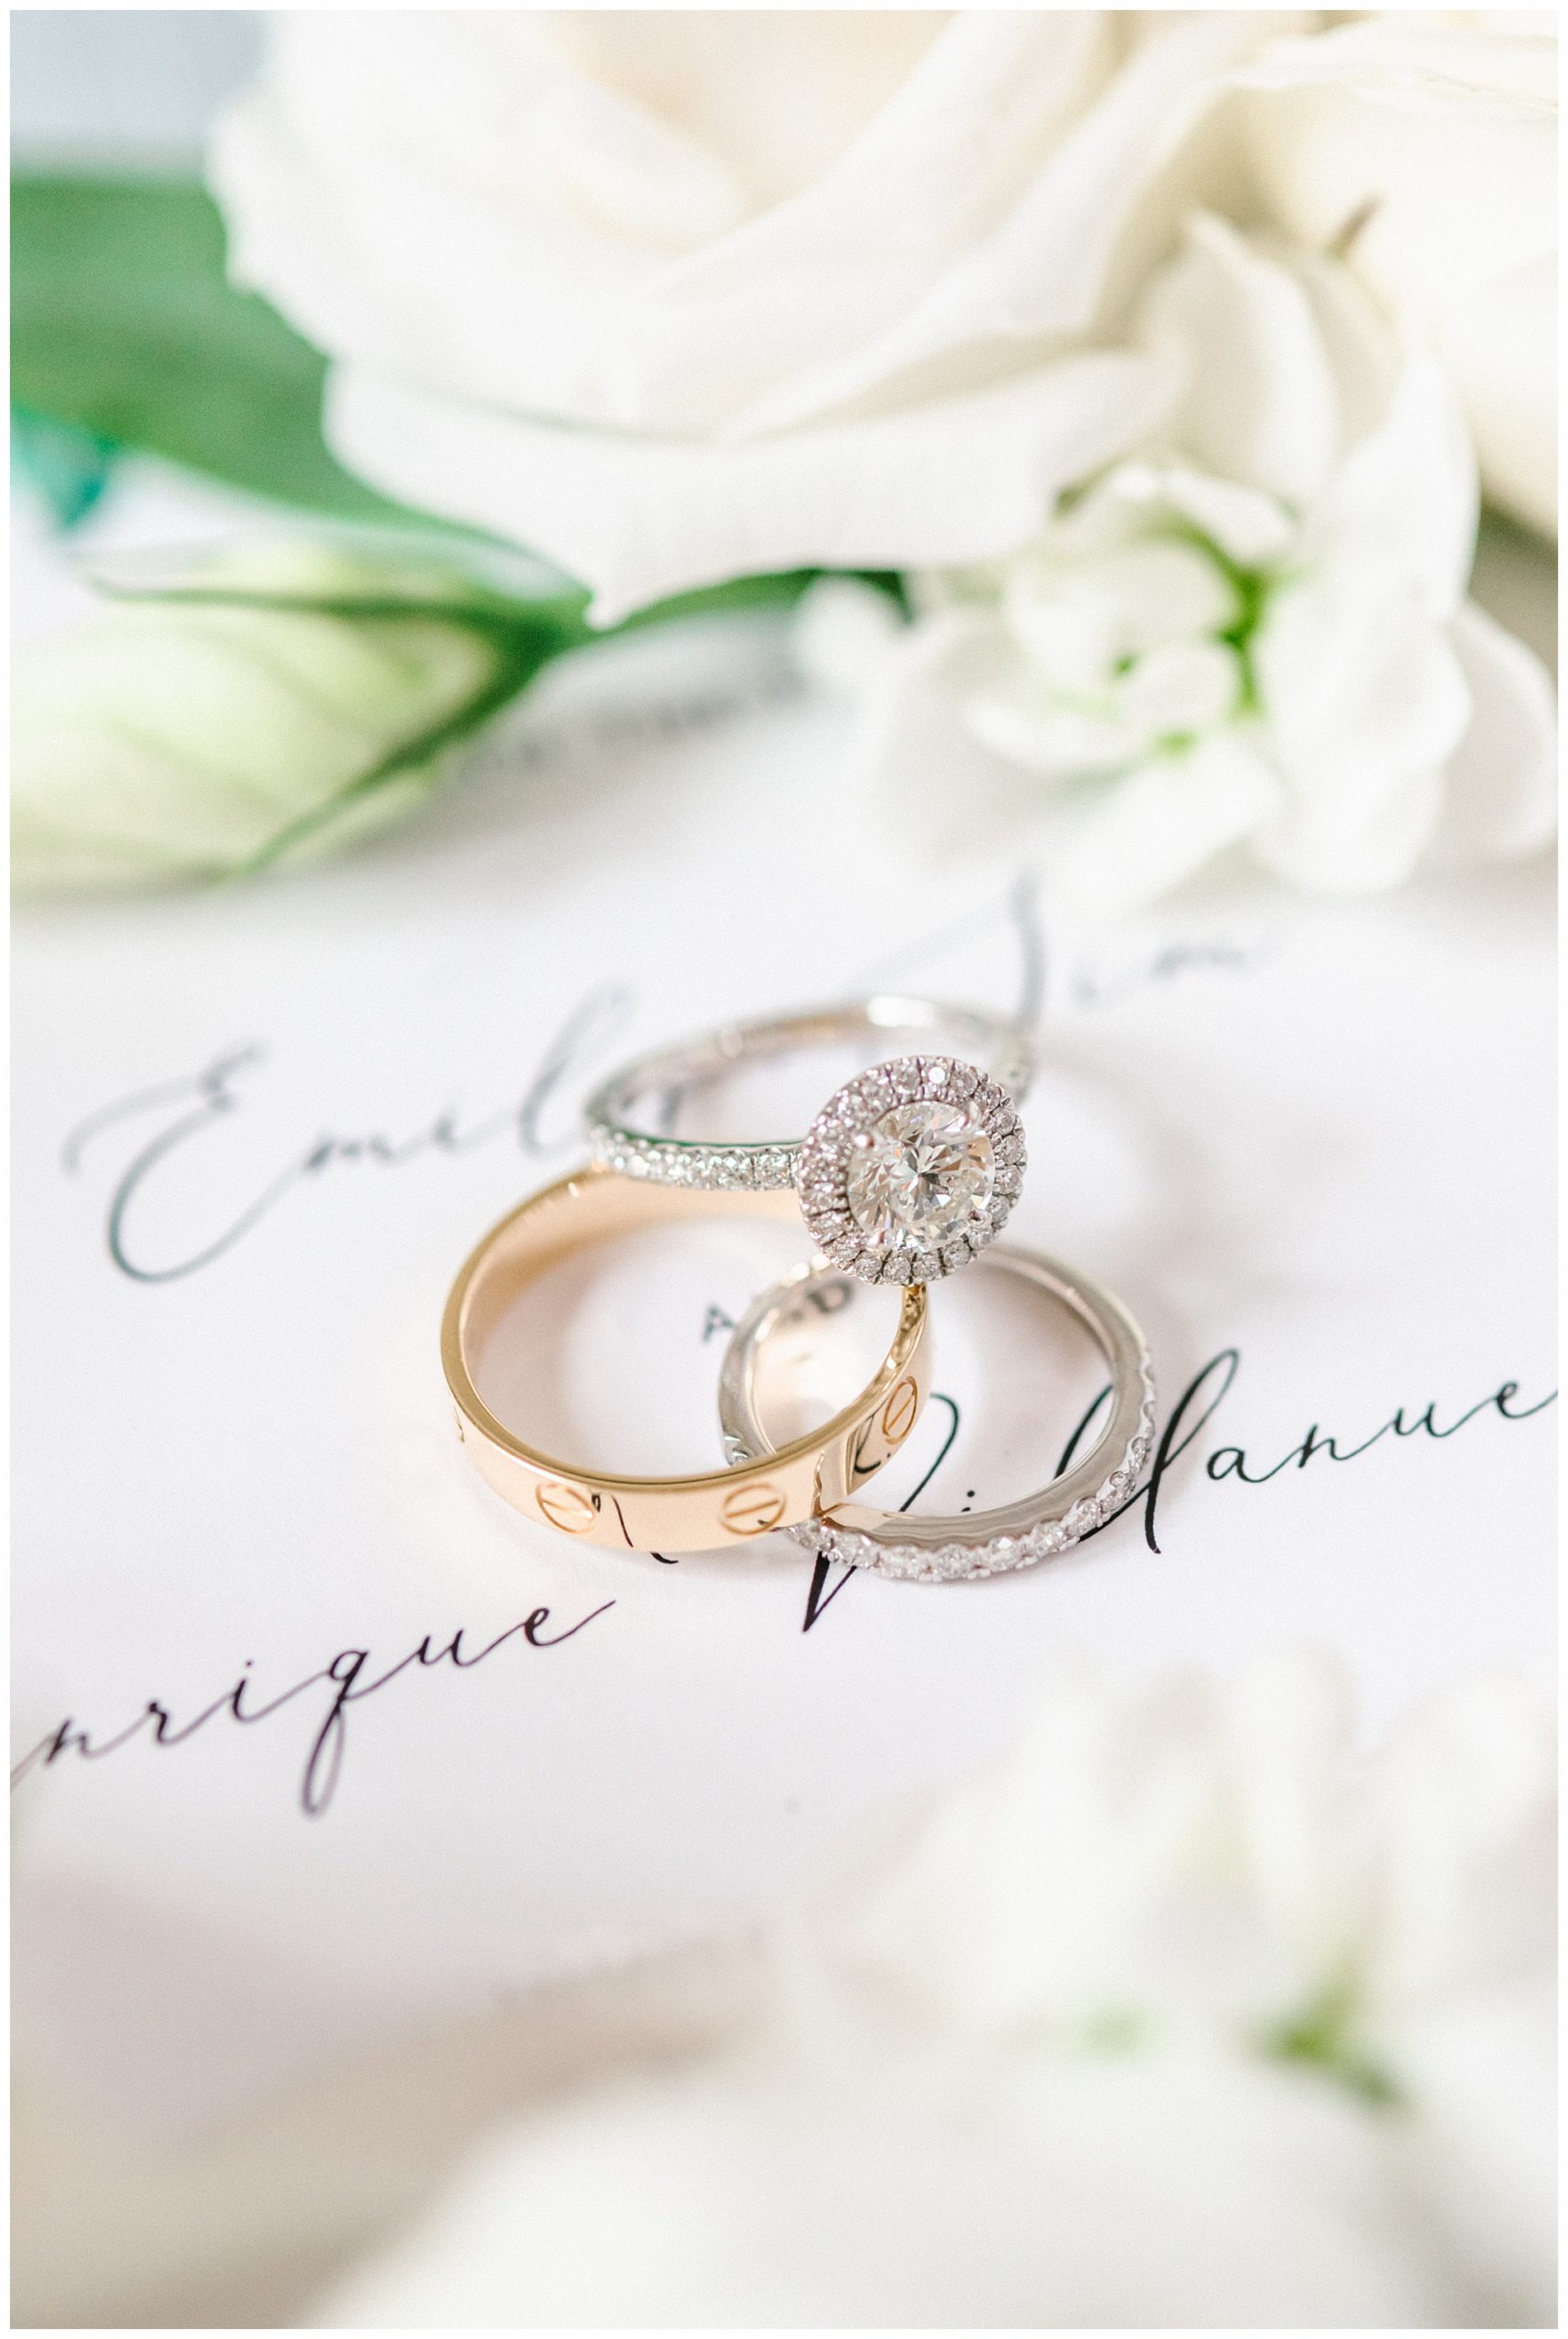 Stunning Diamond Halo Wedding Rings on Invitation